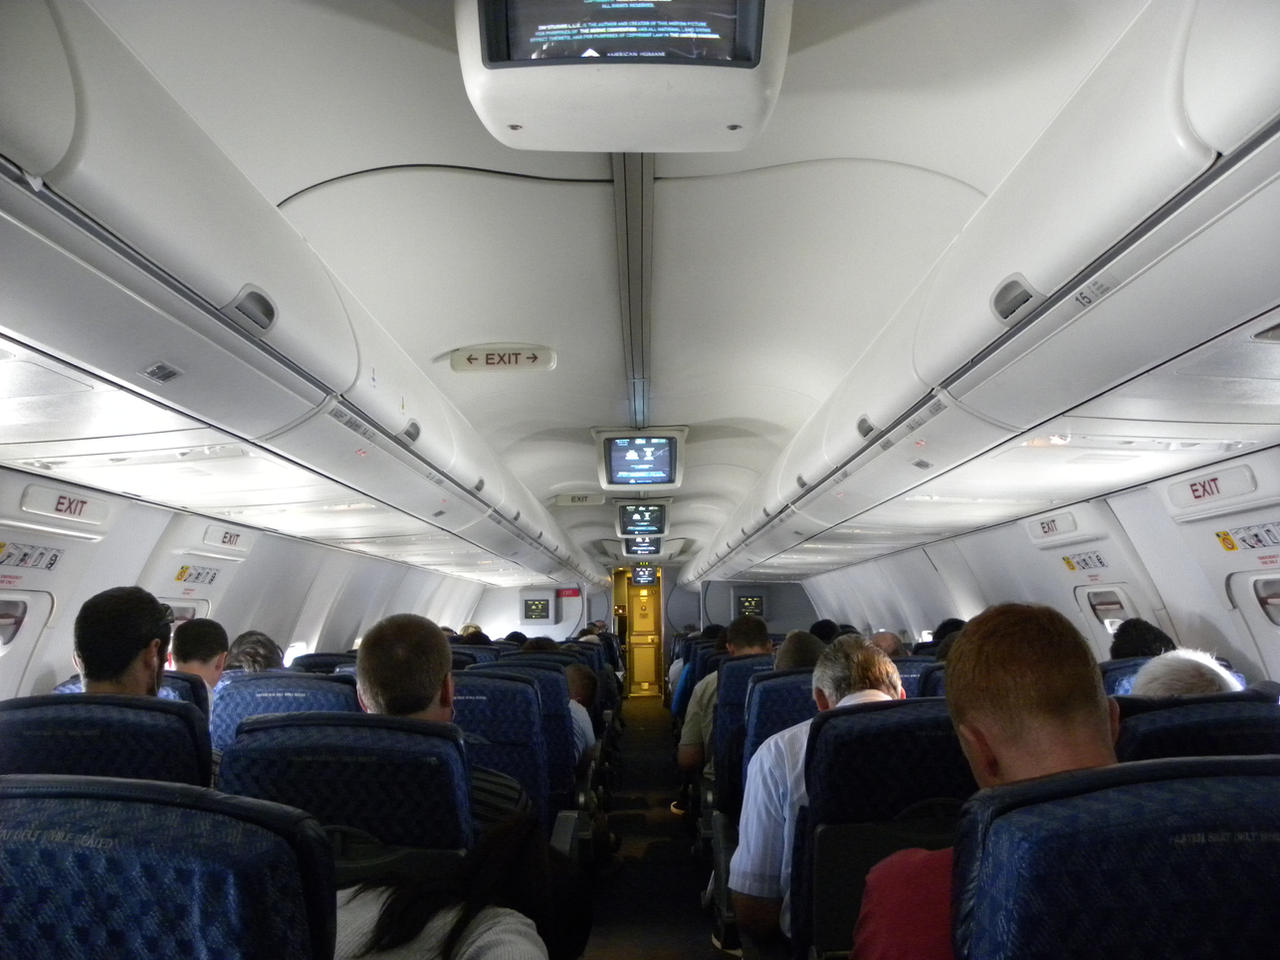 Inside the plane